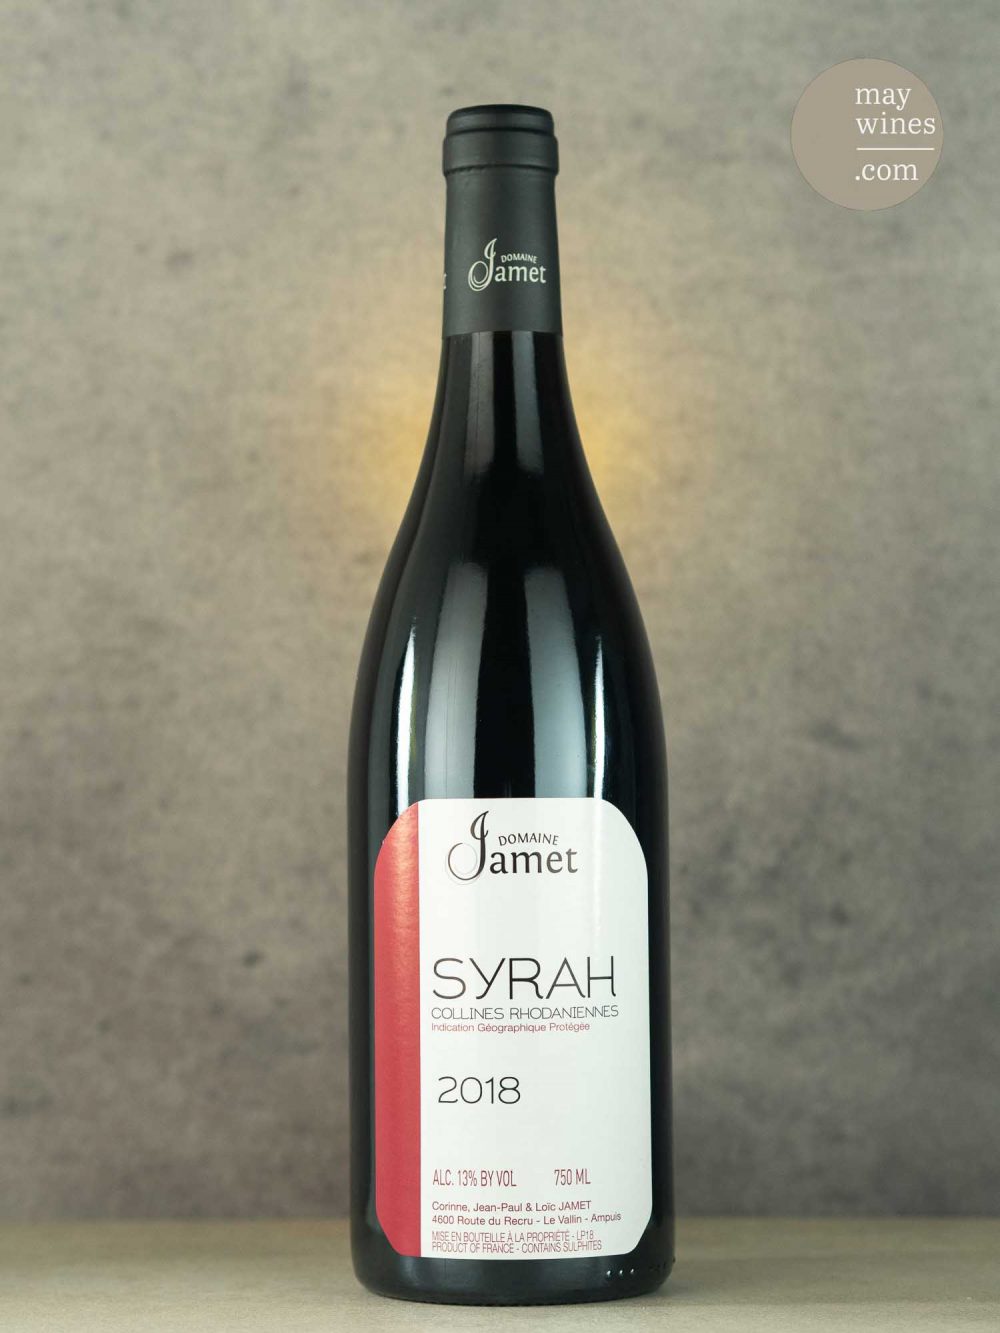 May Wines – Rotwein – 2019 Collines Rhodaniennes IGP Syrah - Domaine Jamet